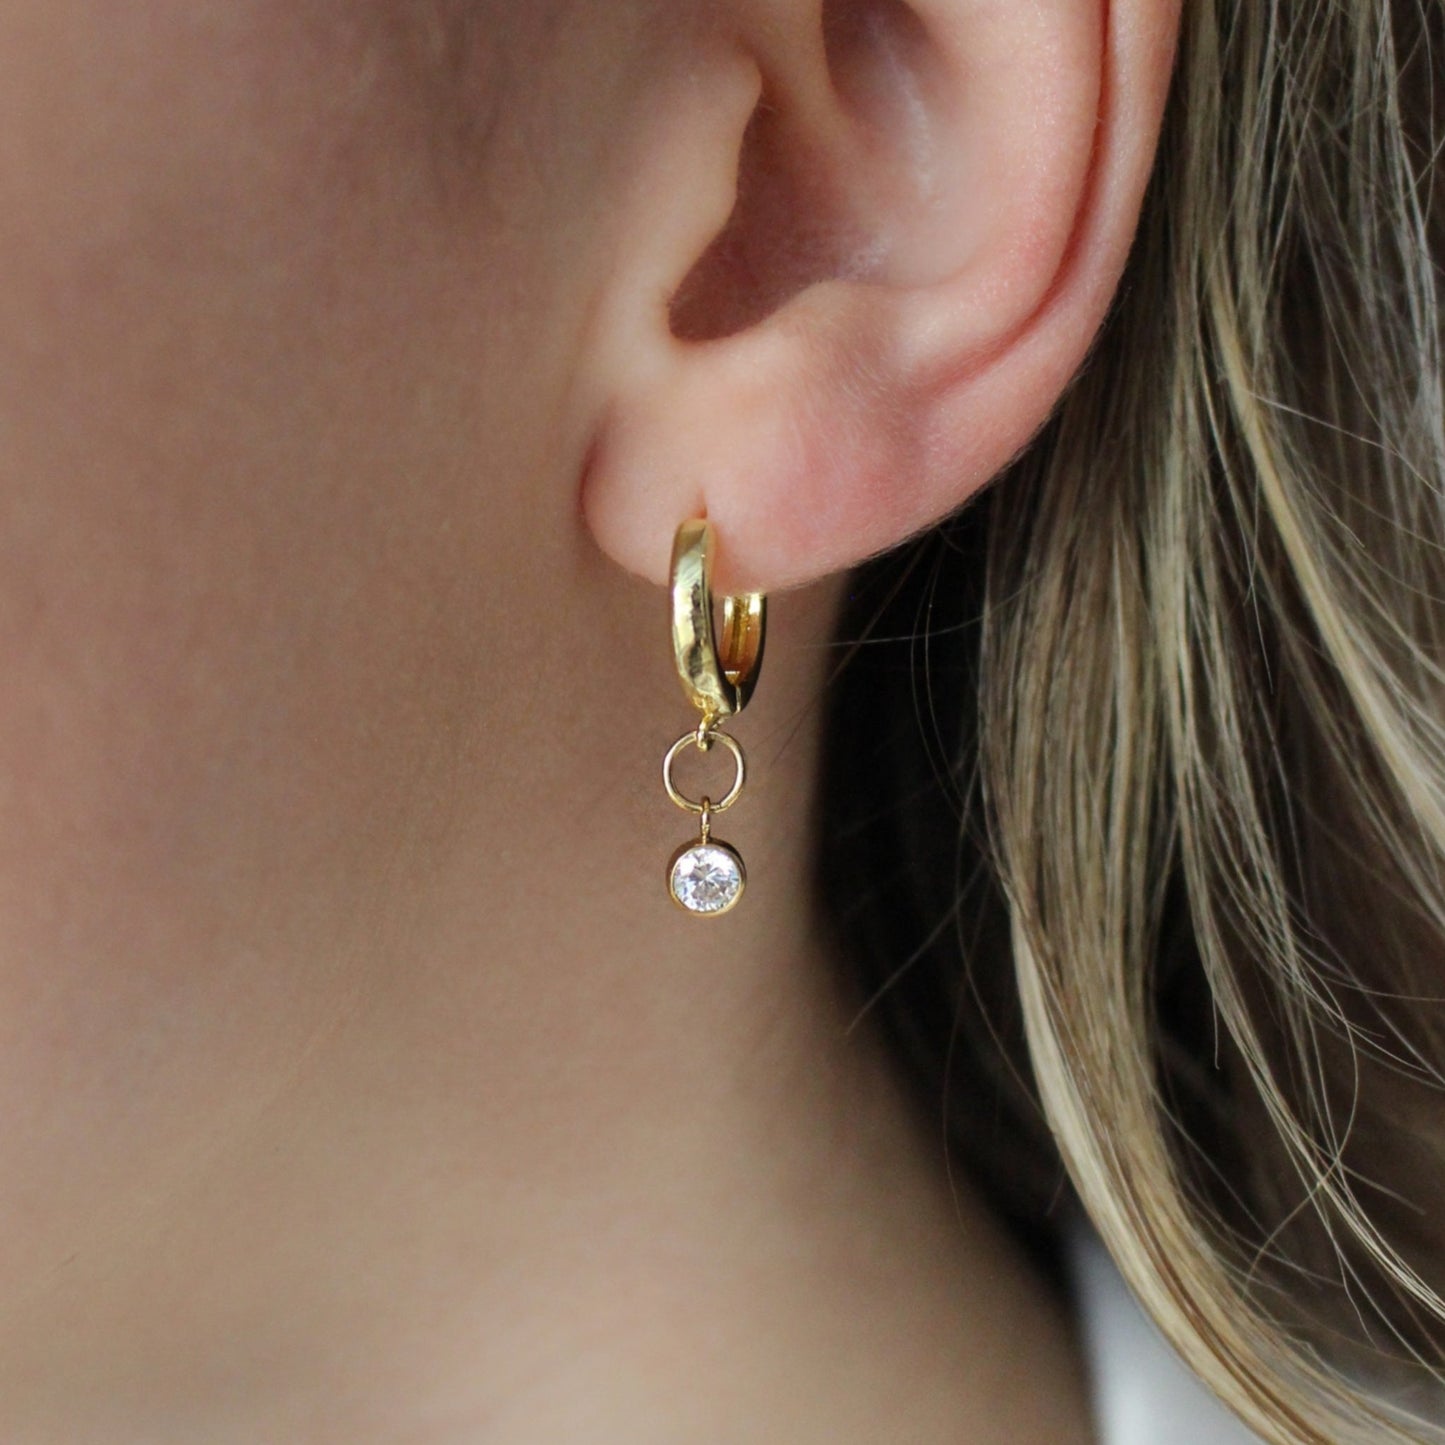 VERA - Earrings Dangling Huggies ∙ Sparkling Zircon 4mm ∙ Gift For Women